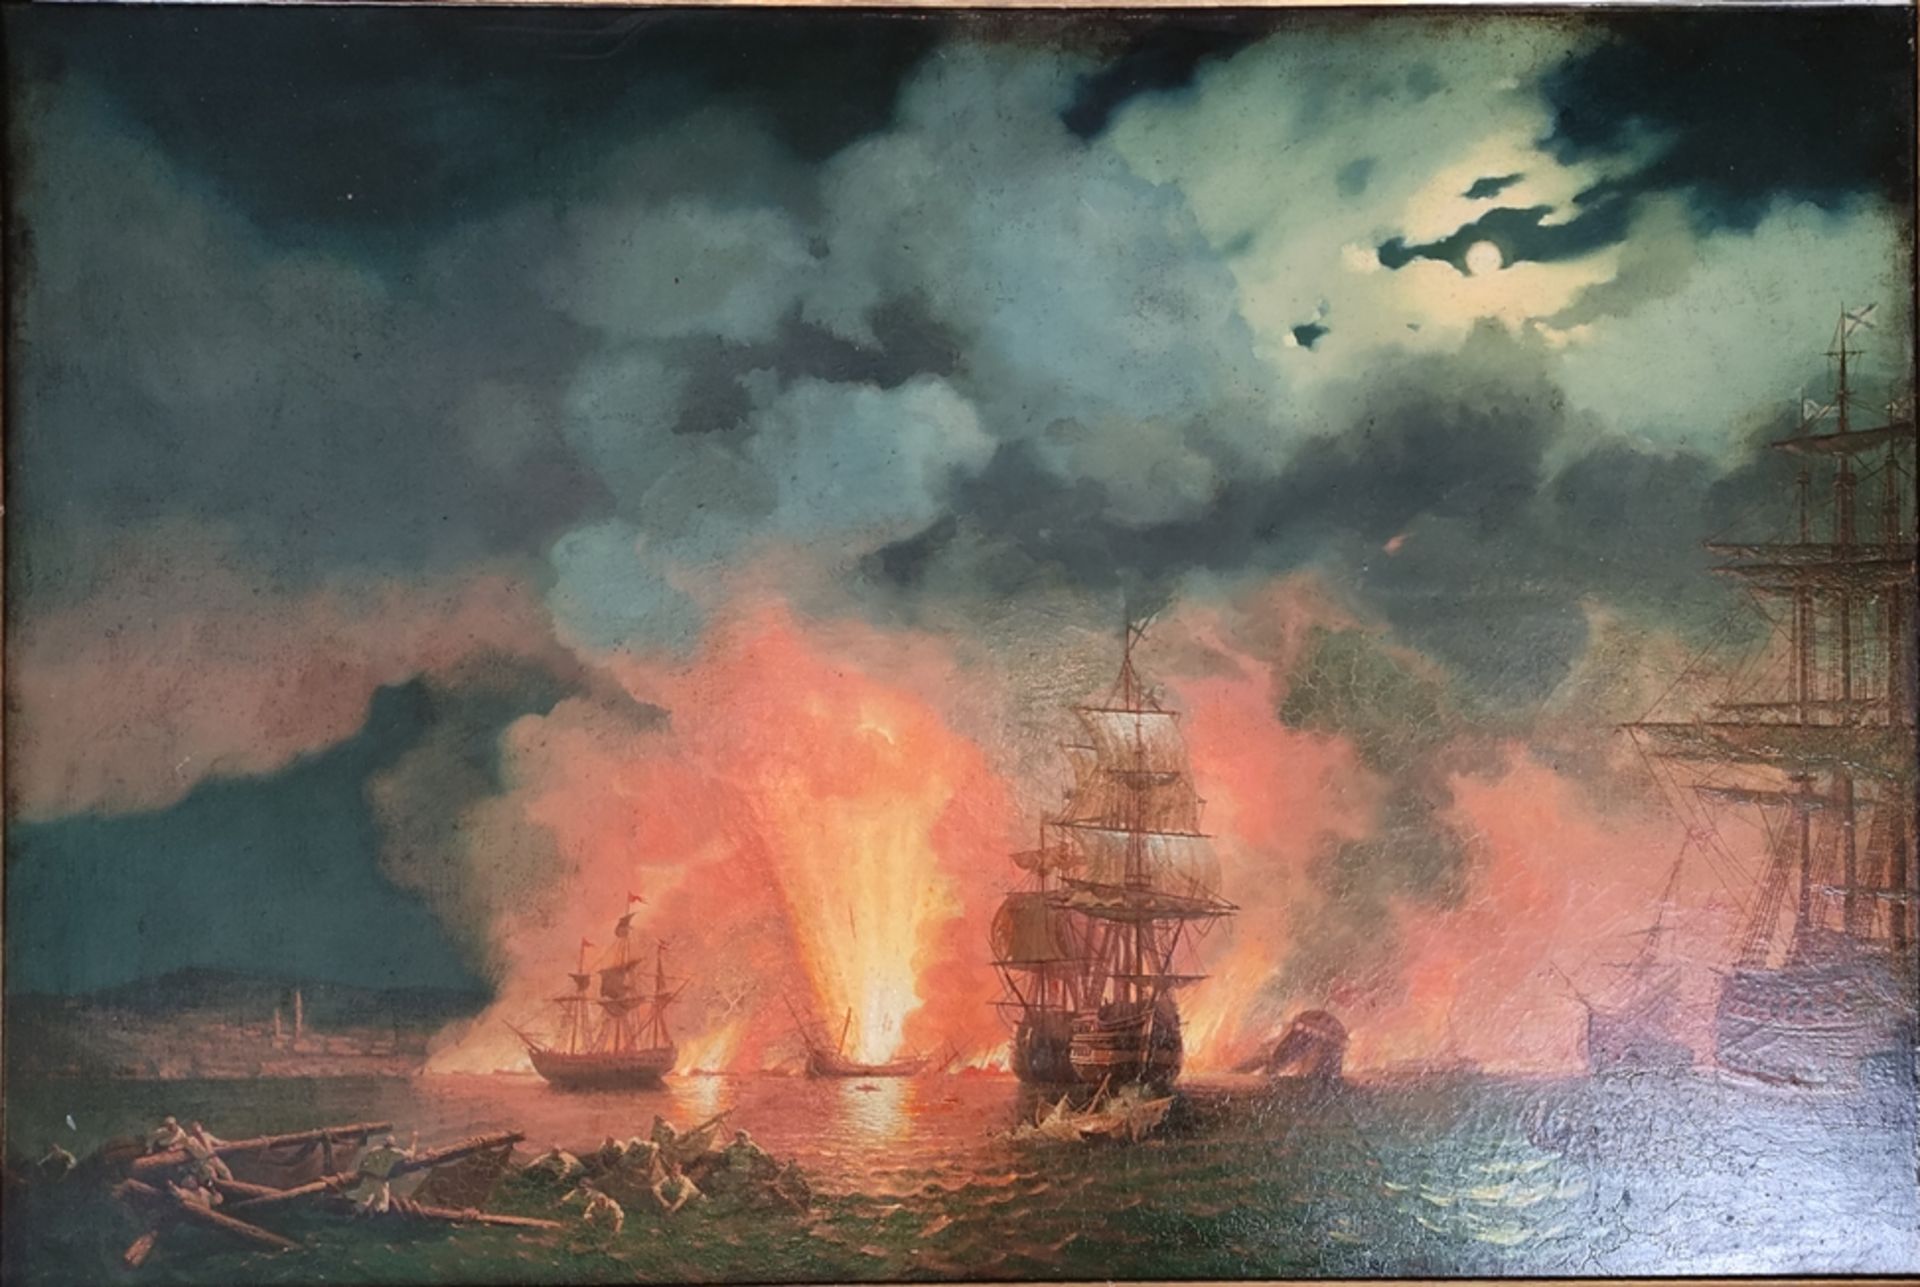 Krawzow (19th century) "Sea Battle", school of Ivan Aivazovsky, sea battle scene at night with seve